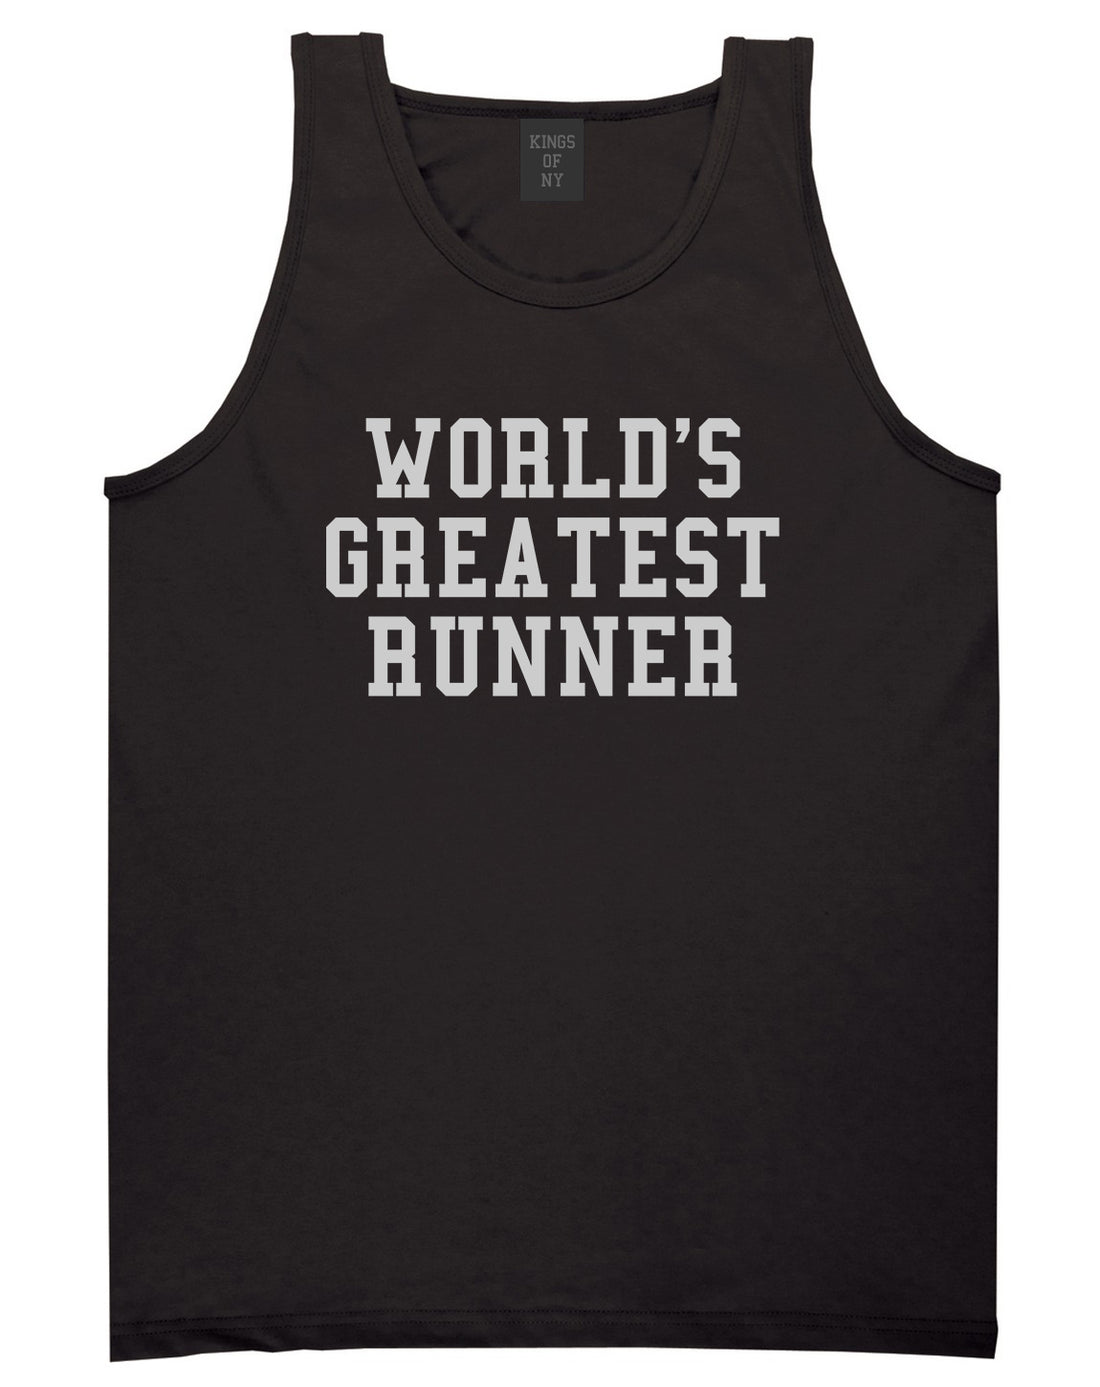 Worlds Greatest Runner Funny Fitness Mens Tank Top T-Shirt Black